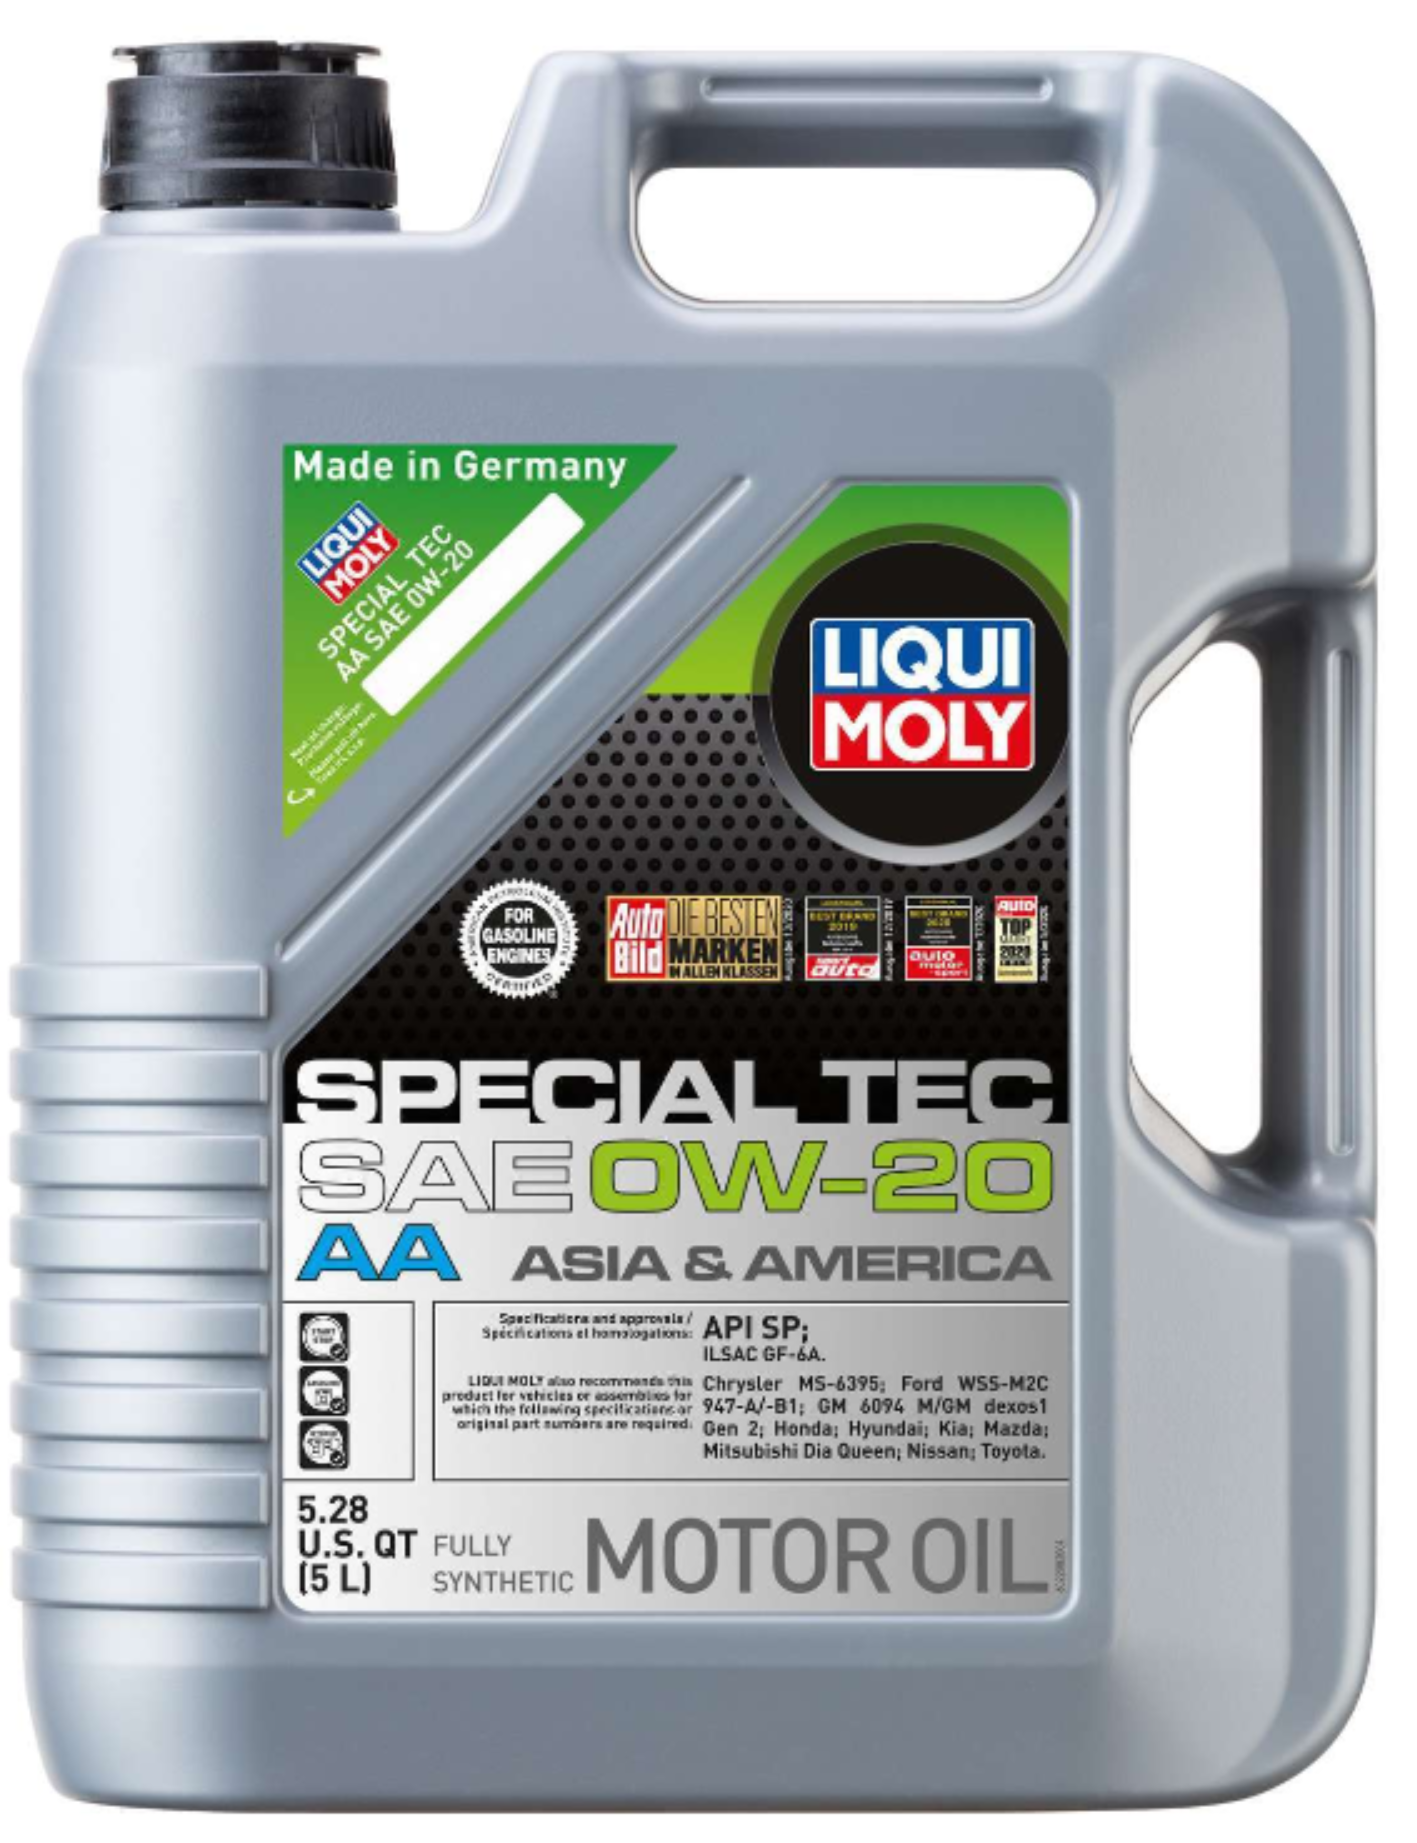 Special Tec AA 0W20 Engine Oil (5 Liter) - Liqui Moly 2208